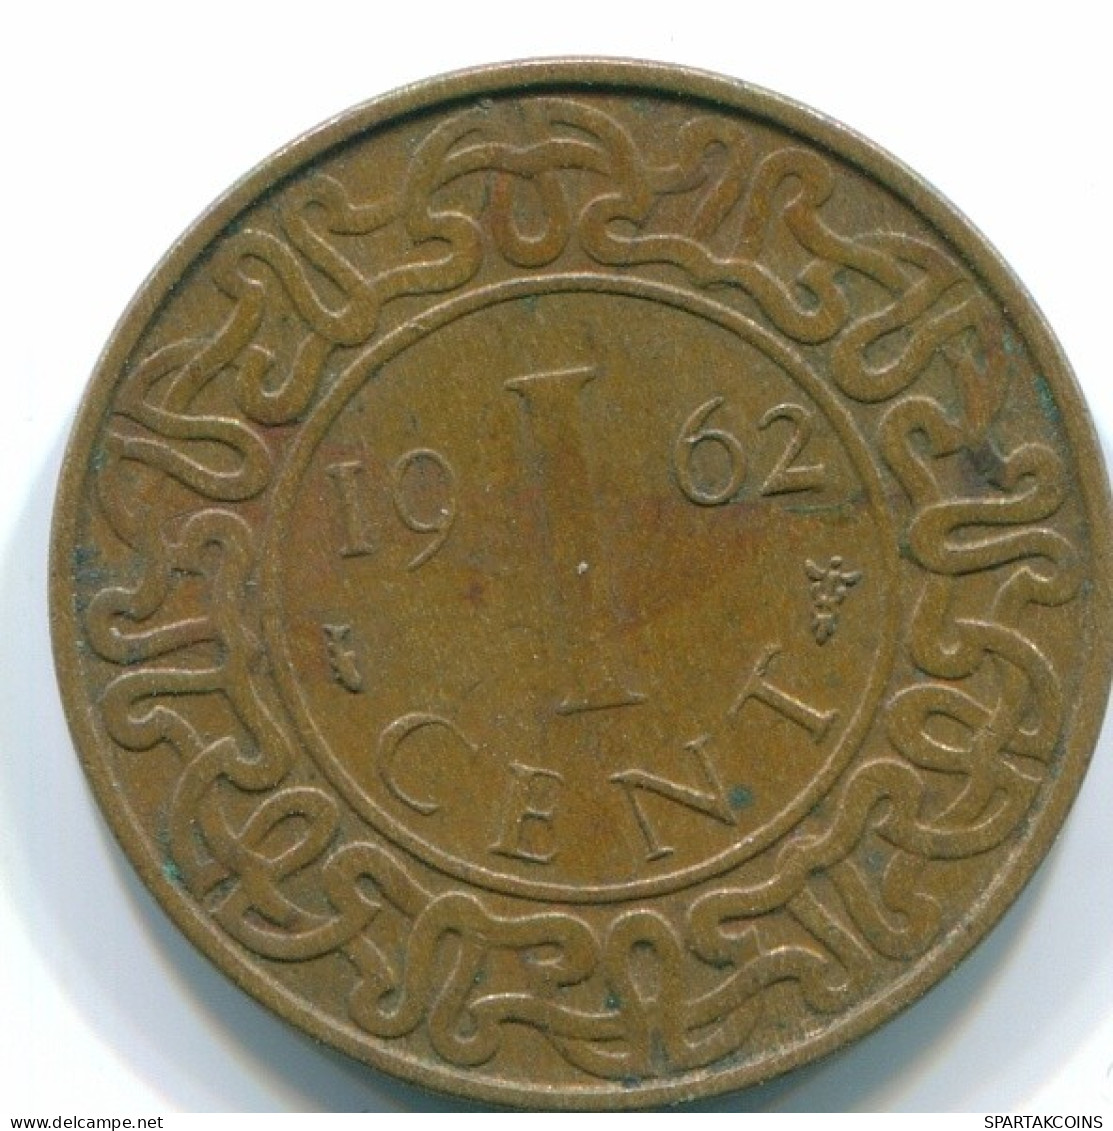 1 CENT 1962 SURINAME Netherlands Bronze Fish Colonial Coin #S10916.U.A - Surinam 1975 - ...